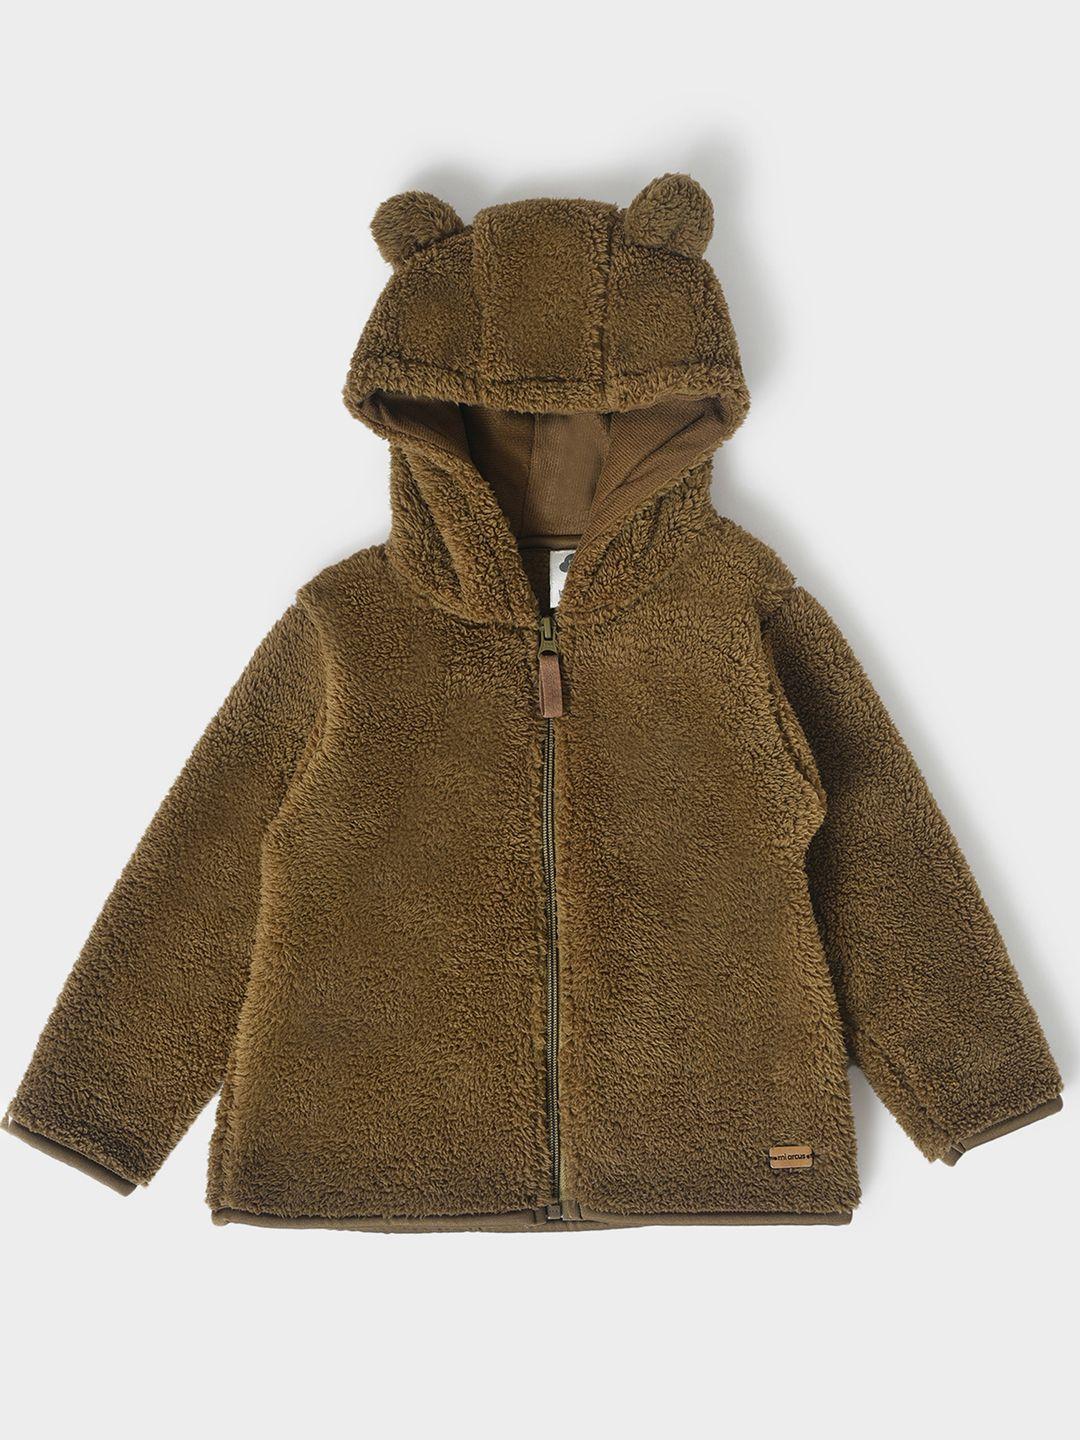 miarcus unisex kids brown lightweight knitted jacket